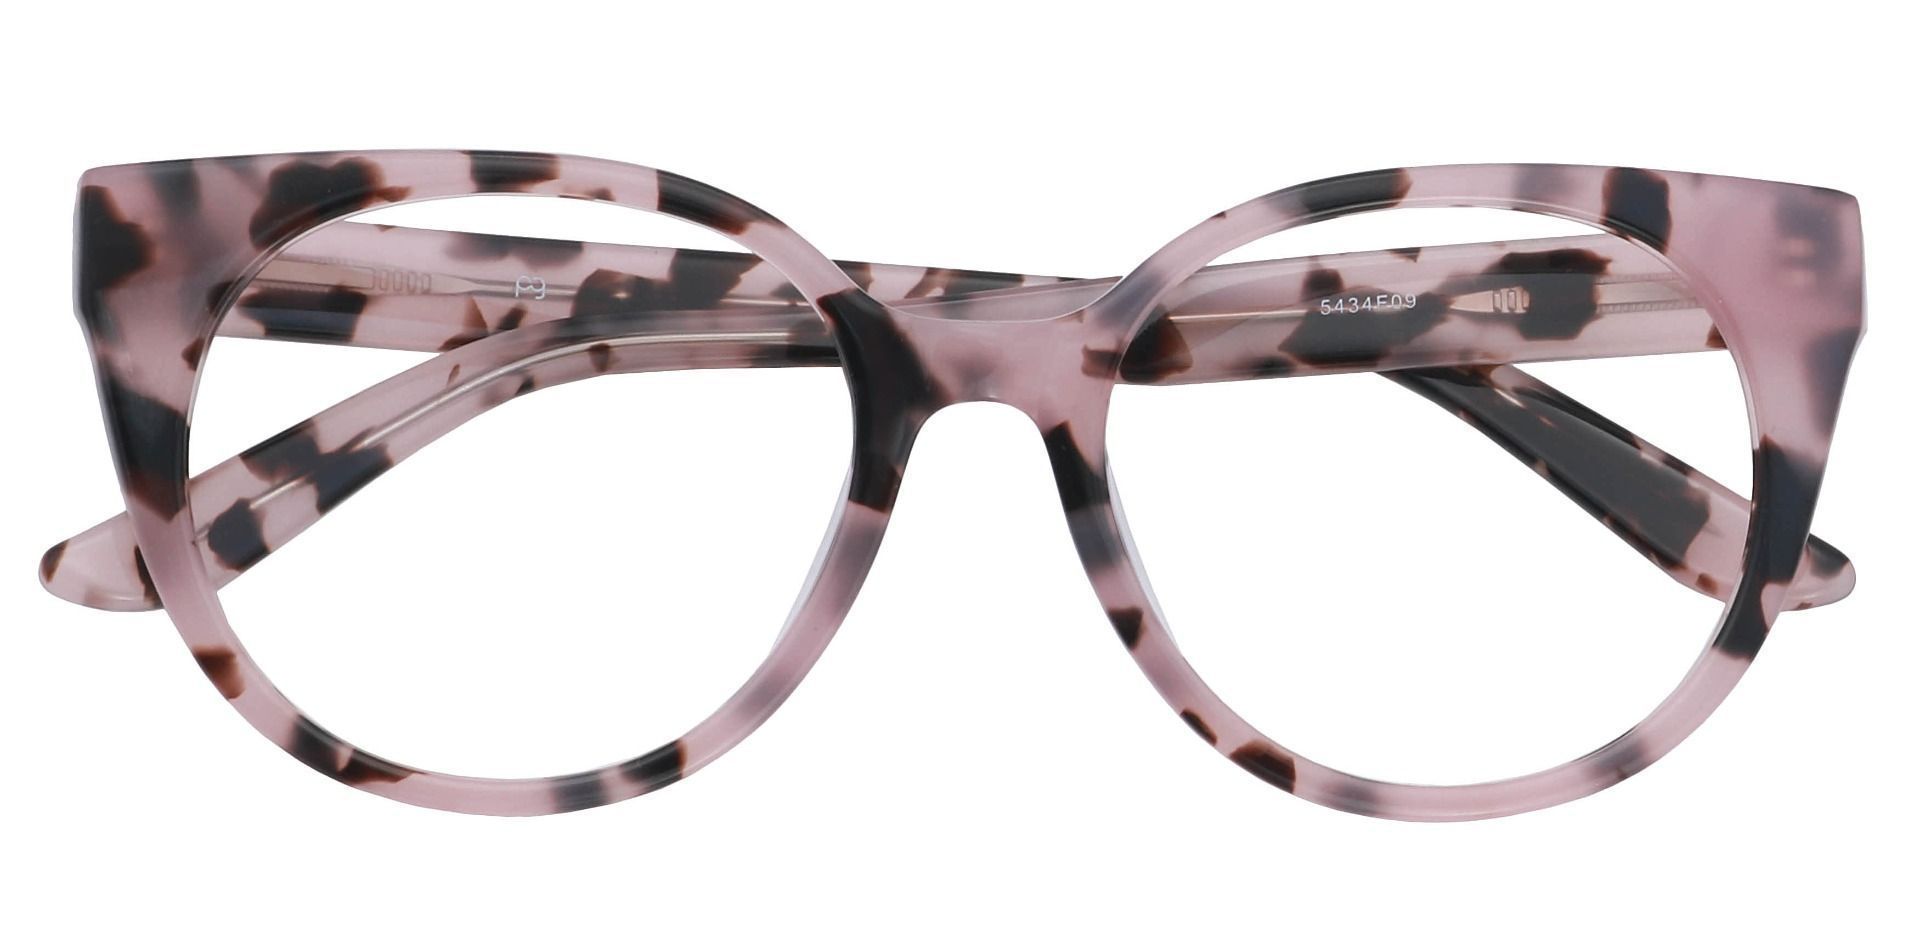 Balmoral Cat-Eye Prescription Glasses - Floral